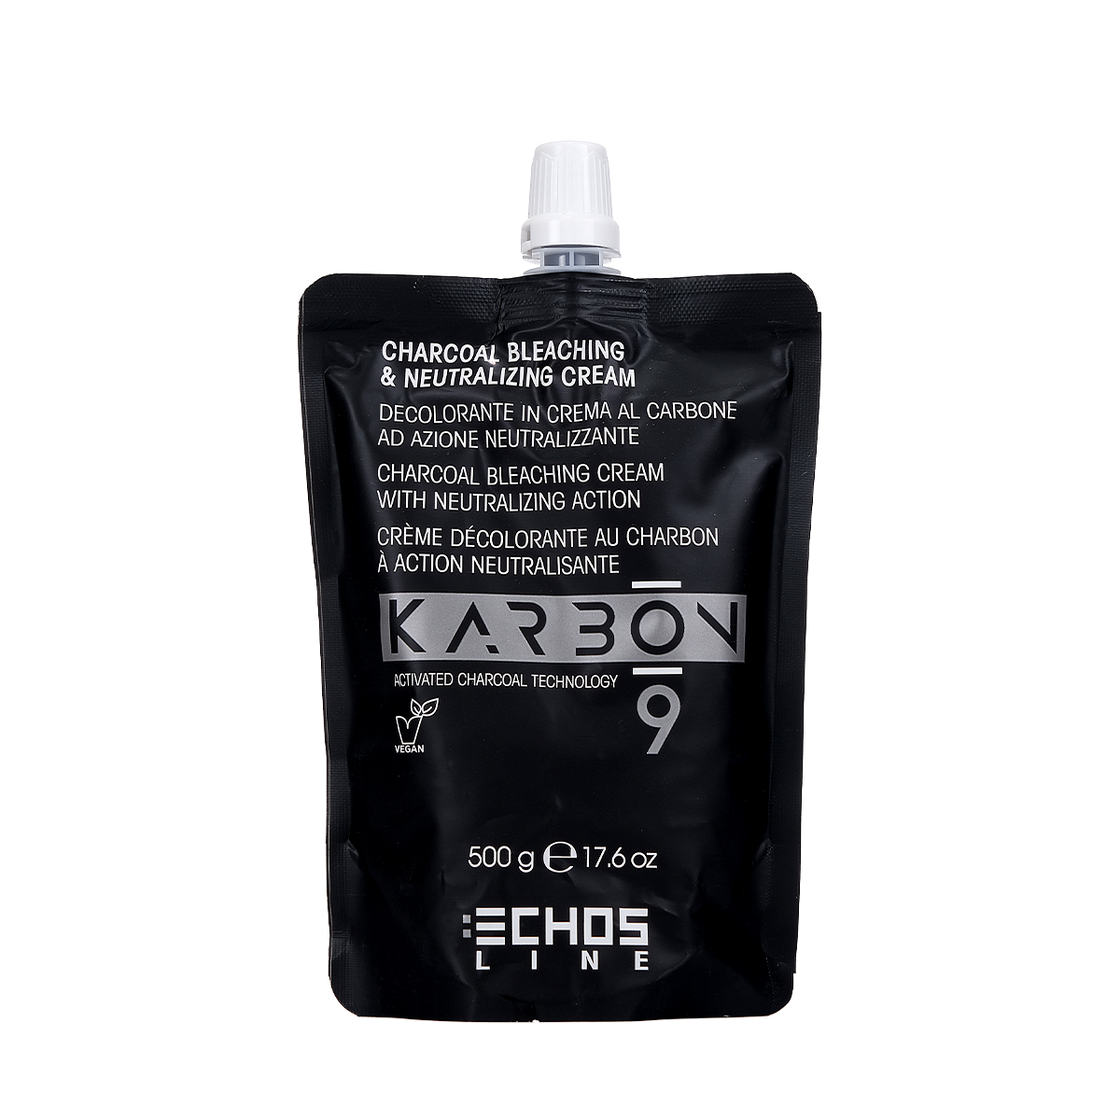 ECHOS KARBON 9 CHARCOAL BLEACHING & NEUTRALIZING CREAM DECO 500 GR